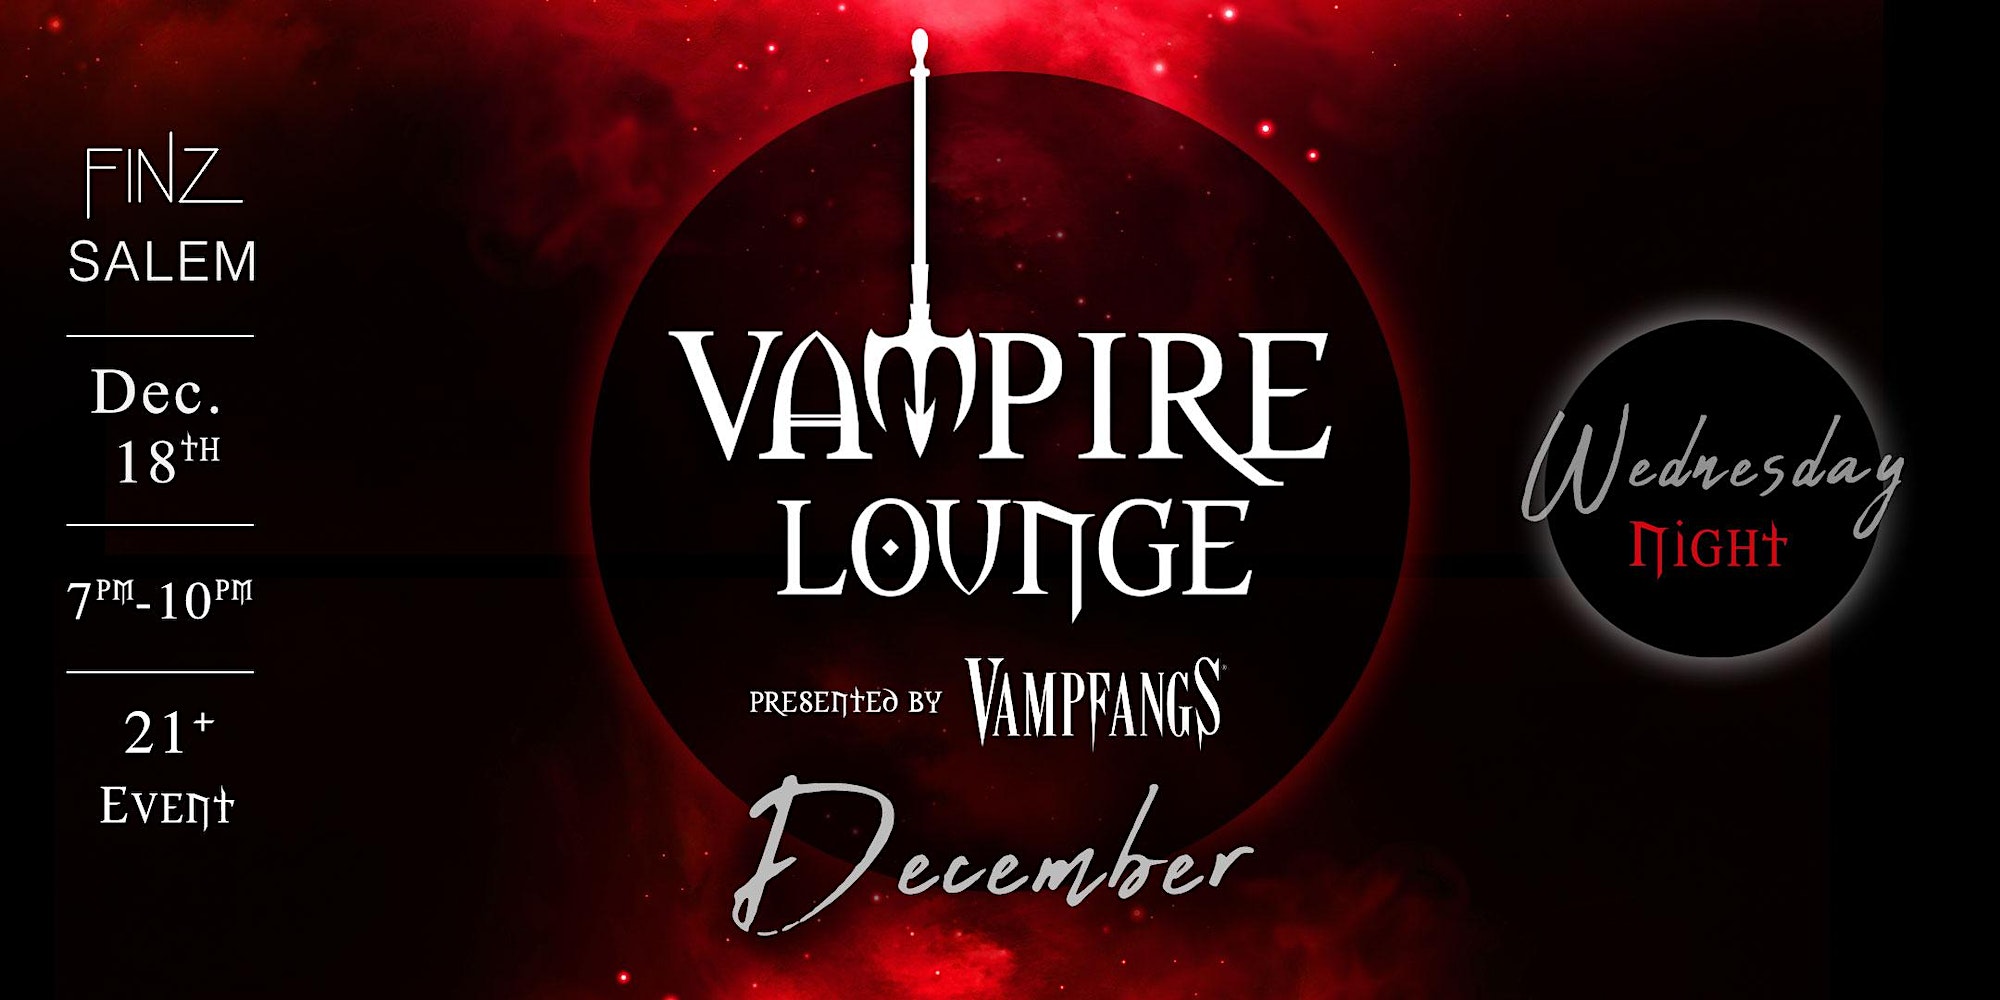 December Flyer for Vampire Lounge - SEO Marketing Expert Edition